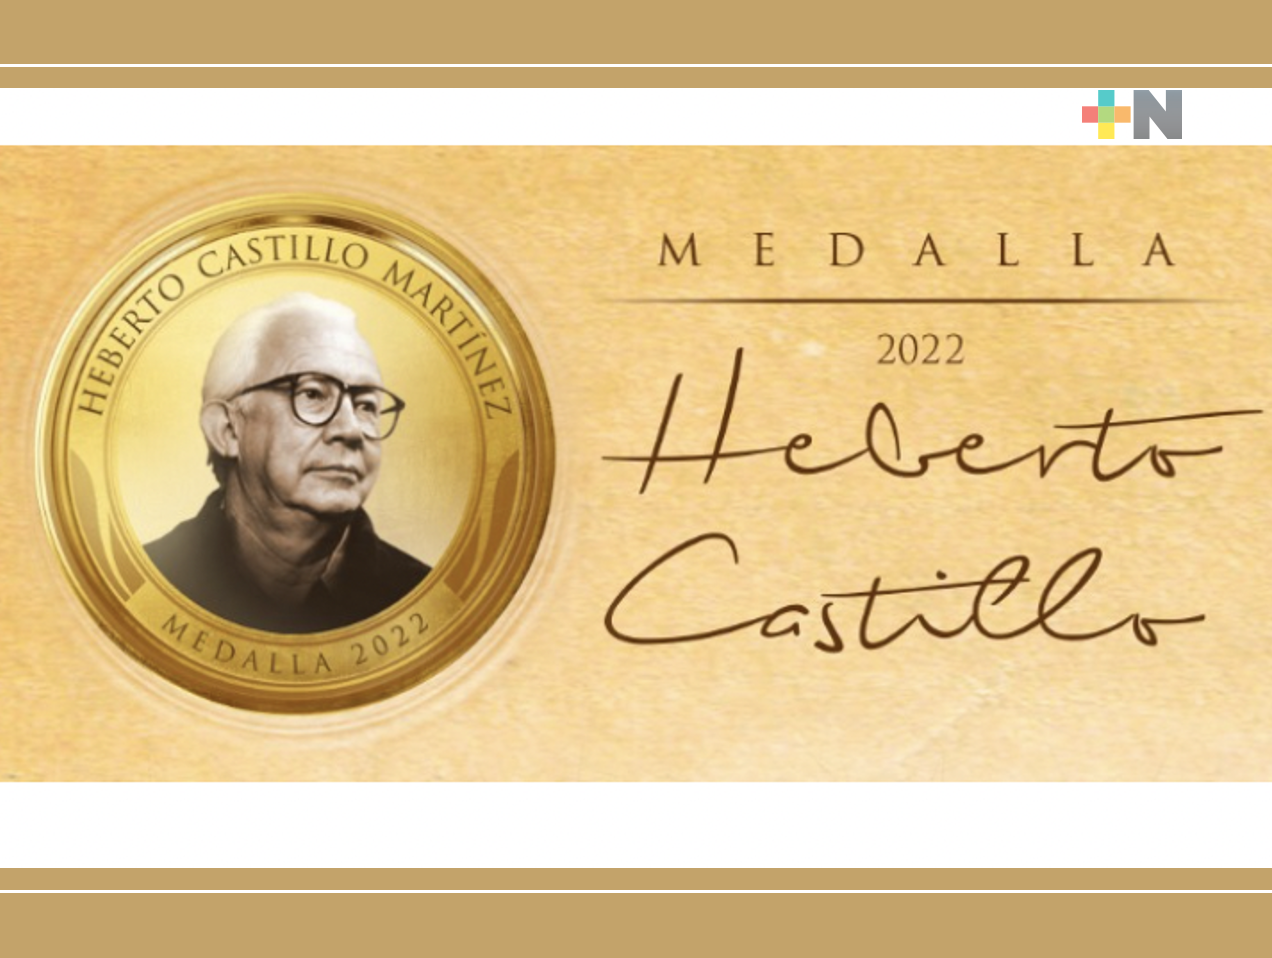 Emite Congreso convocatoria para entrega de medalla Heberto Castillo 2022